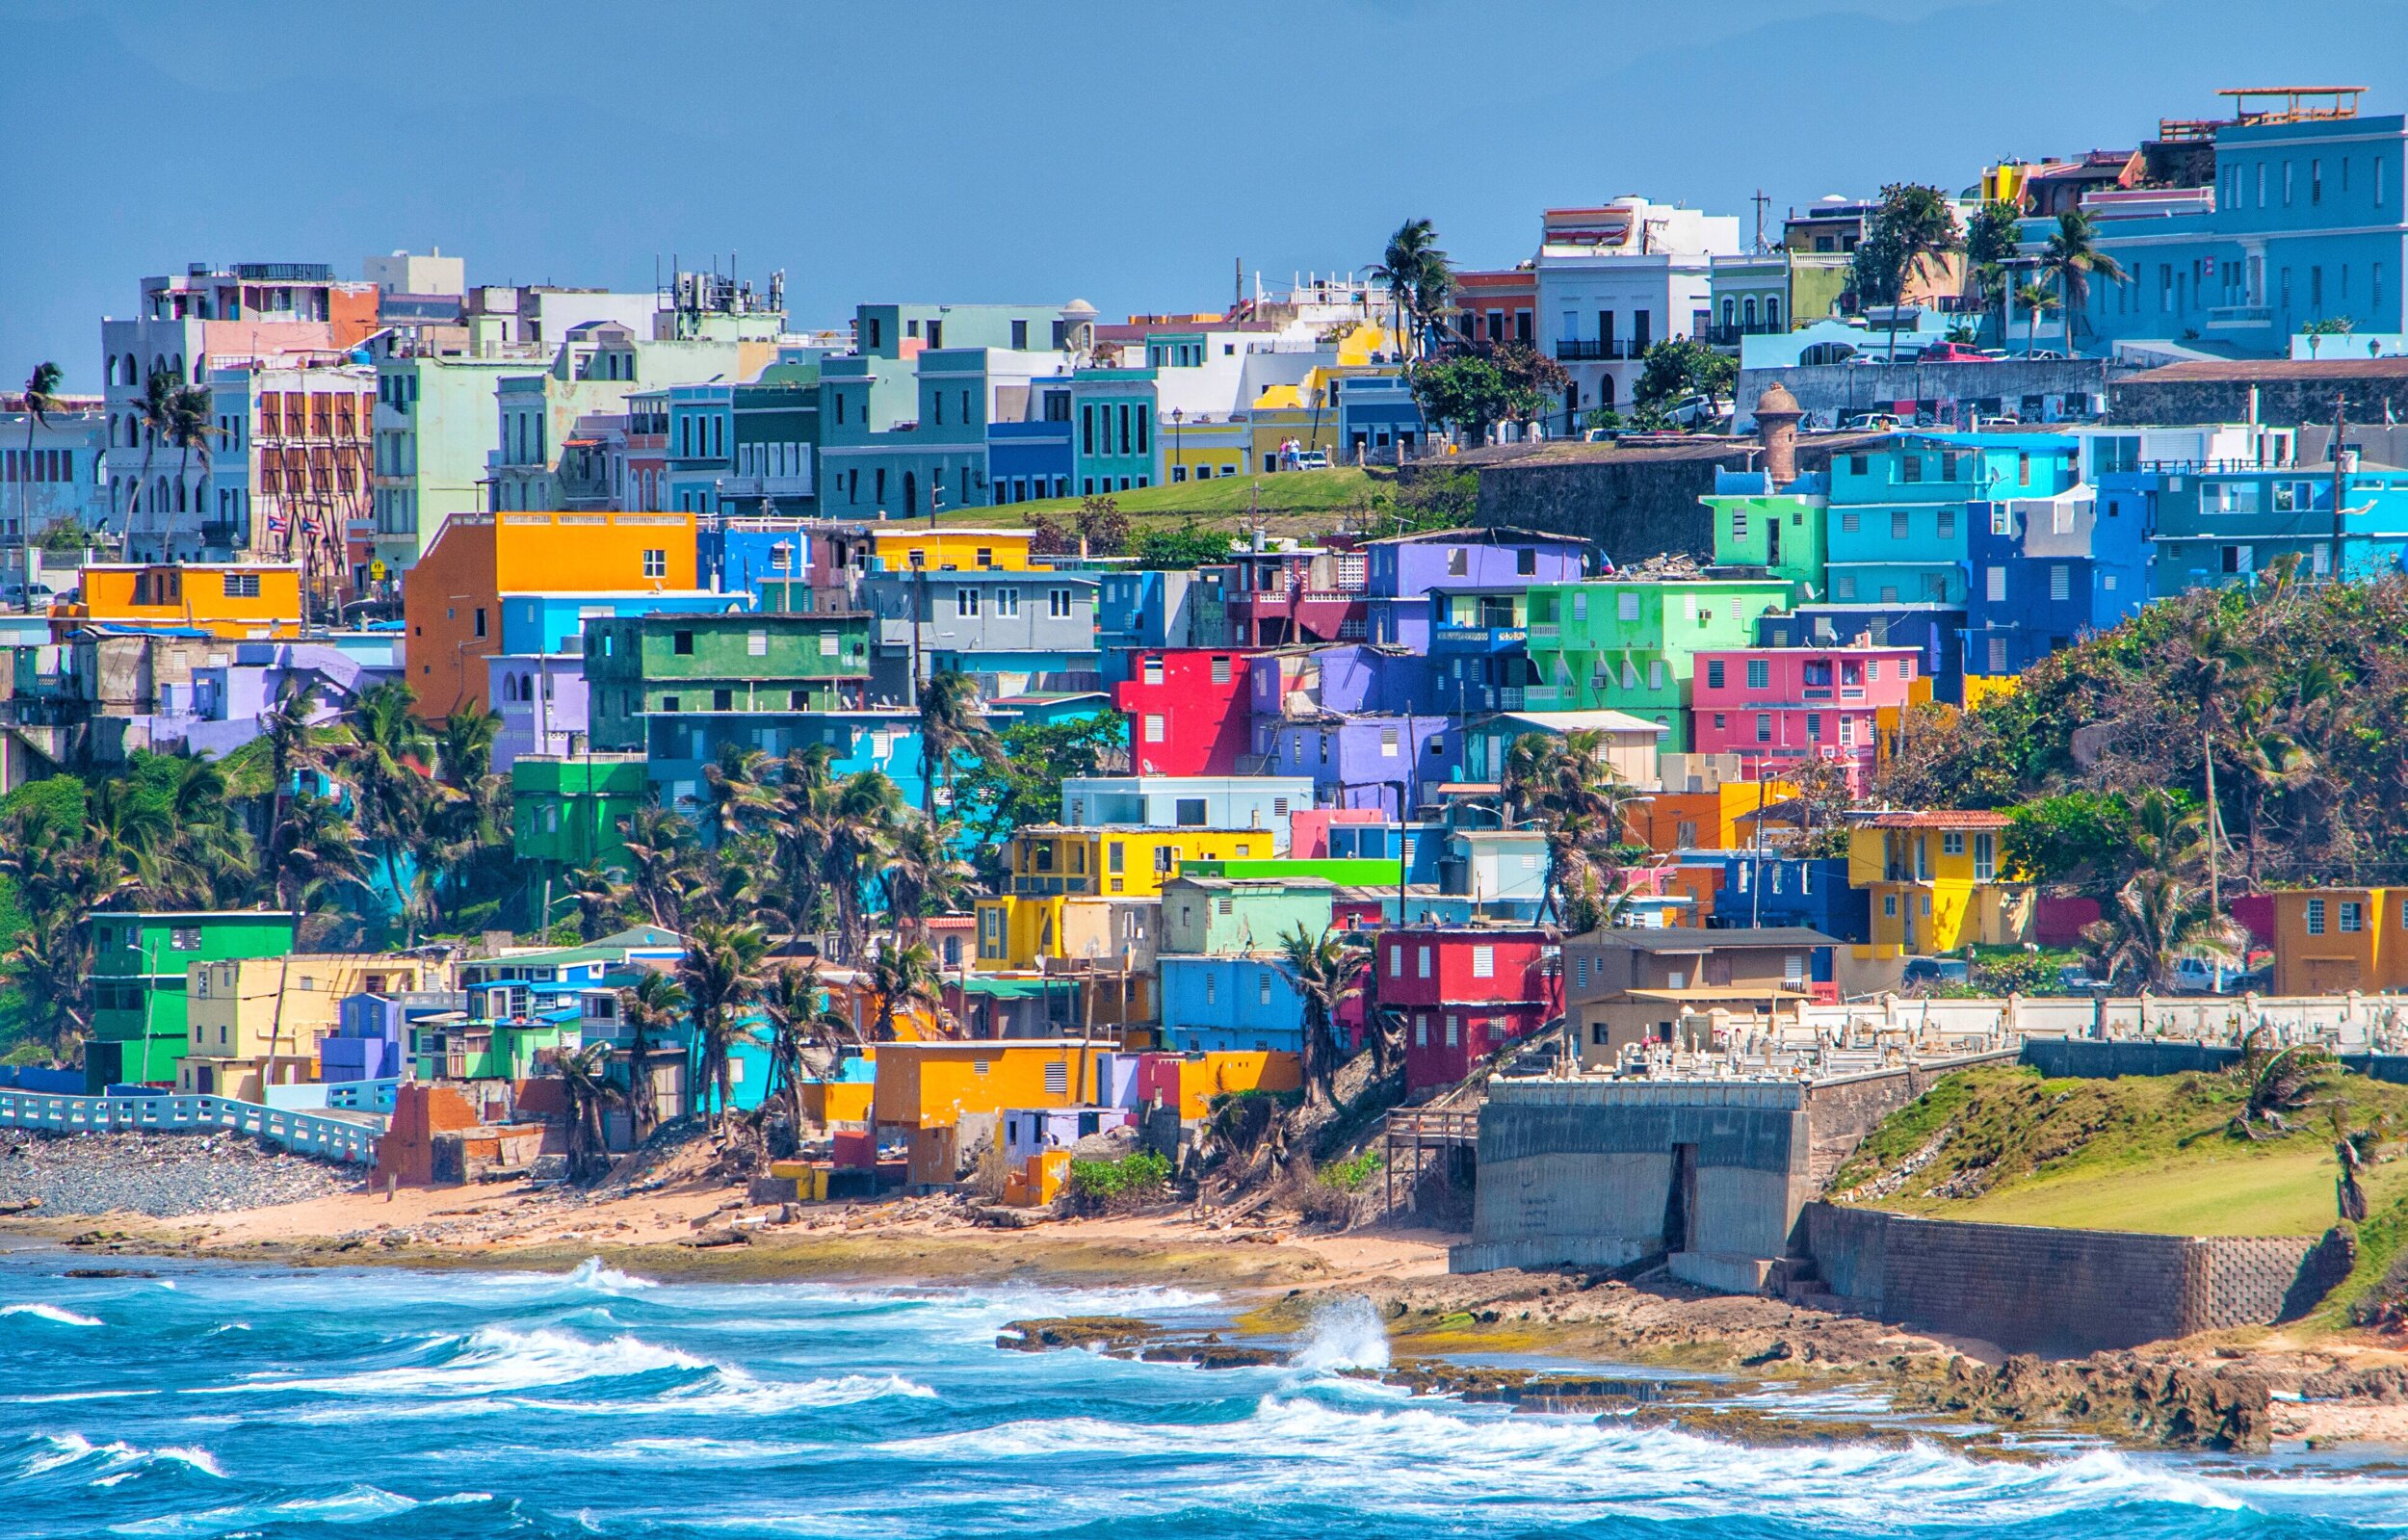 colorful-houses-line-the-hillside-over-looking-the-ocean-on-the-island-of-san-juan-puerto-rico_t20_koA8QP.jpg